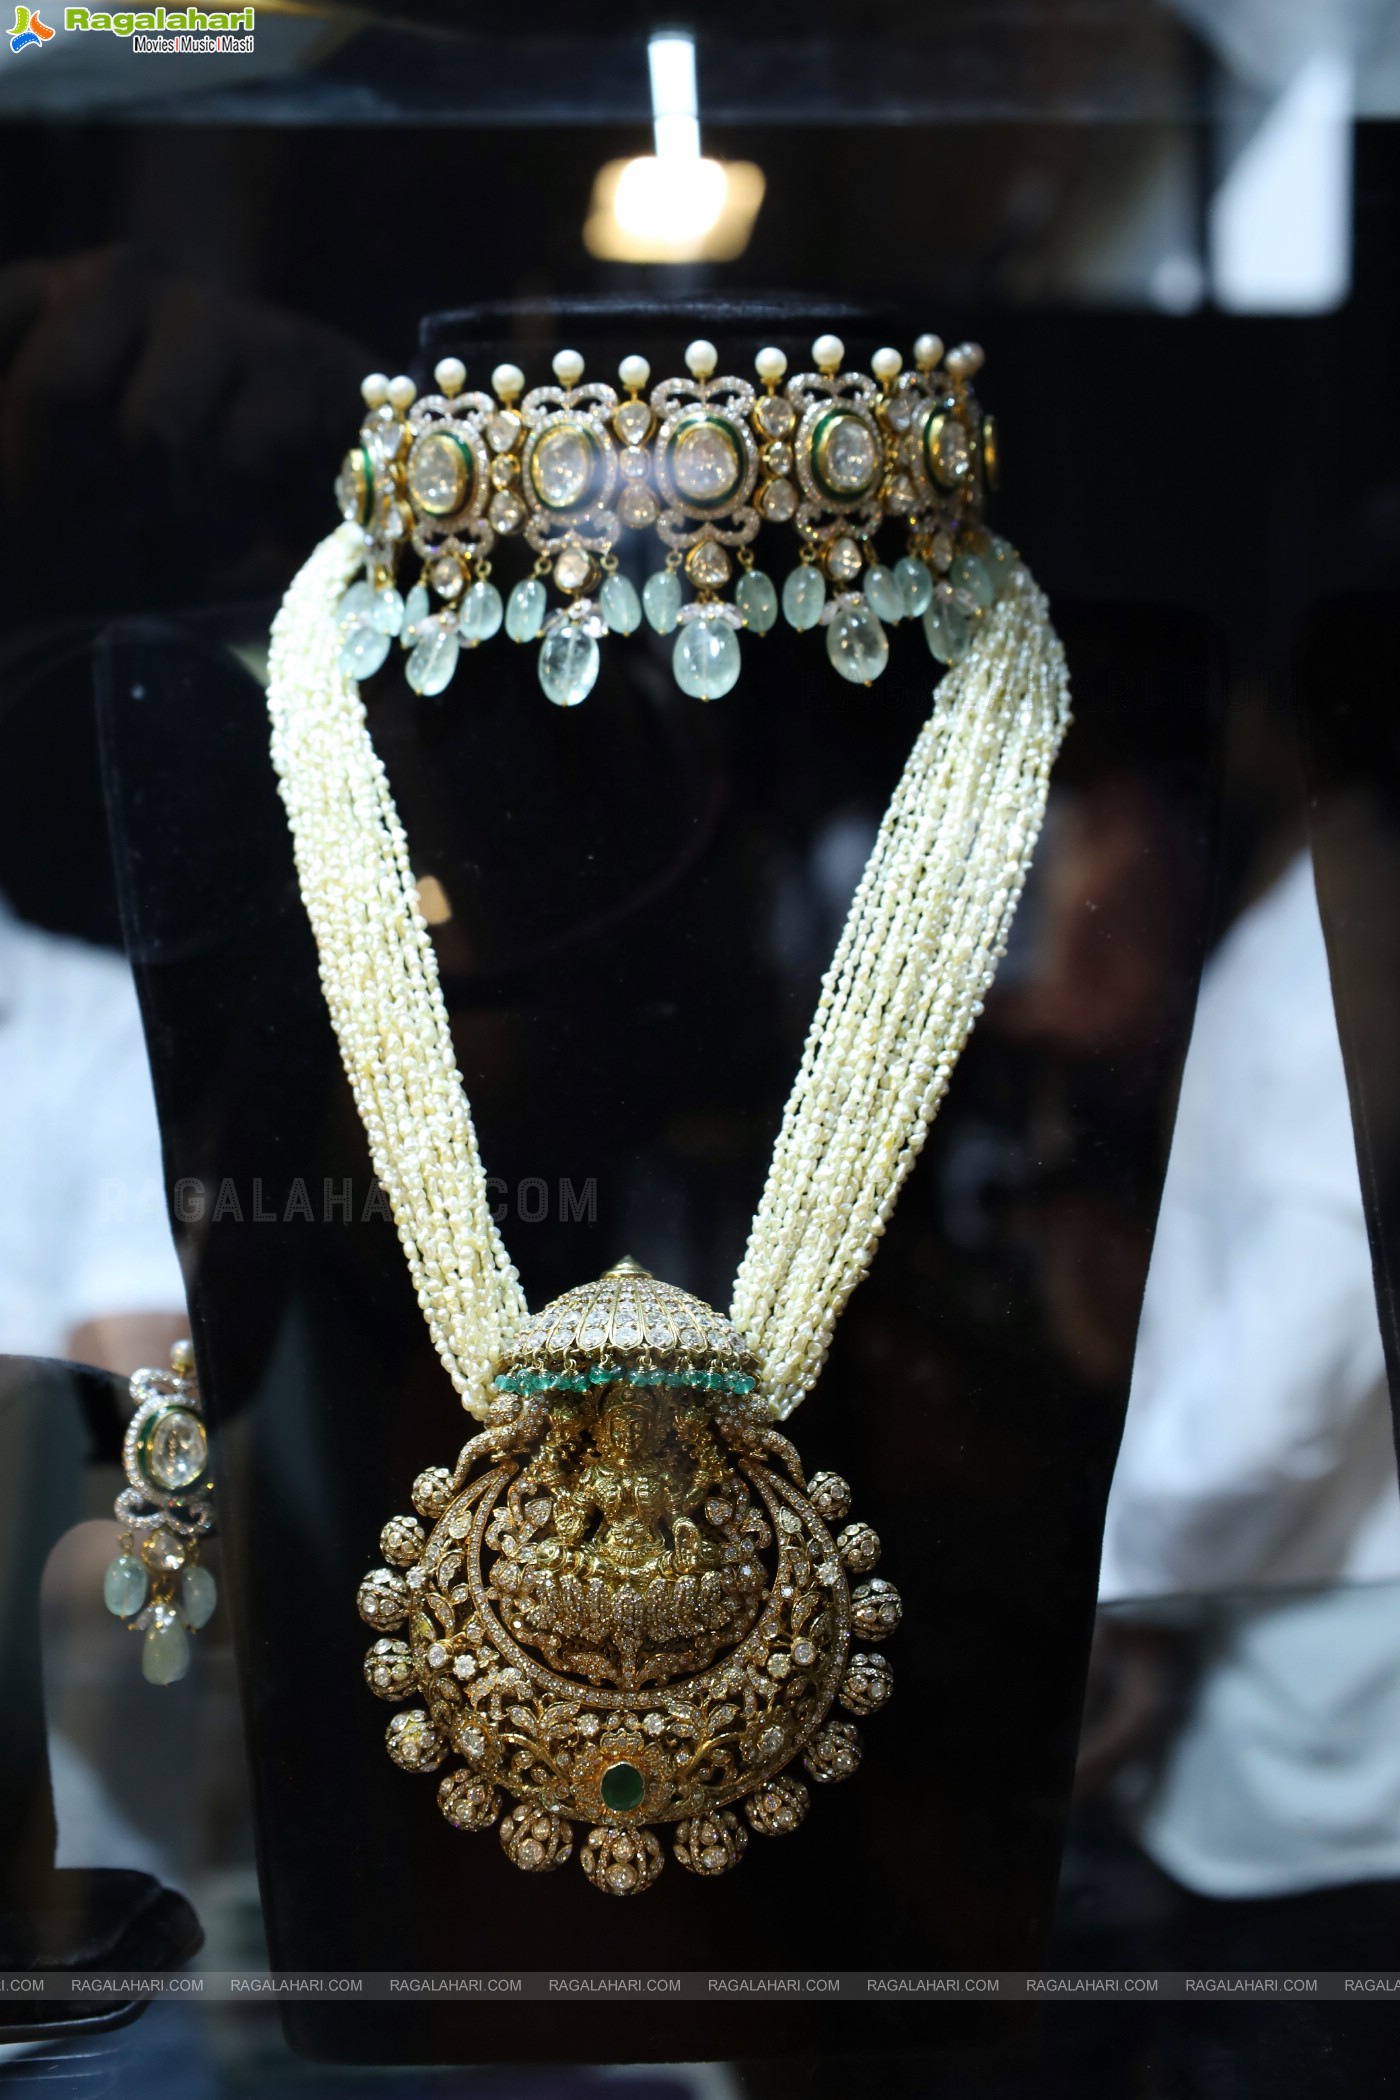  Tridhaa's Jewellery Launch Event in Hyderabad